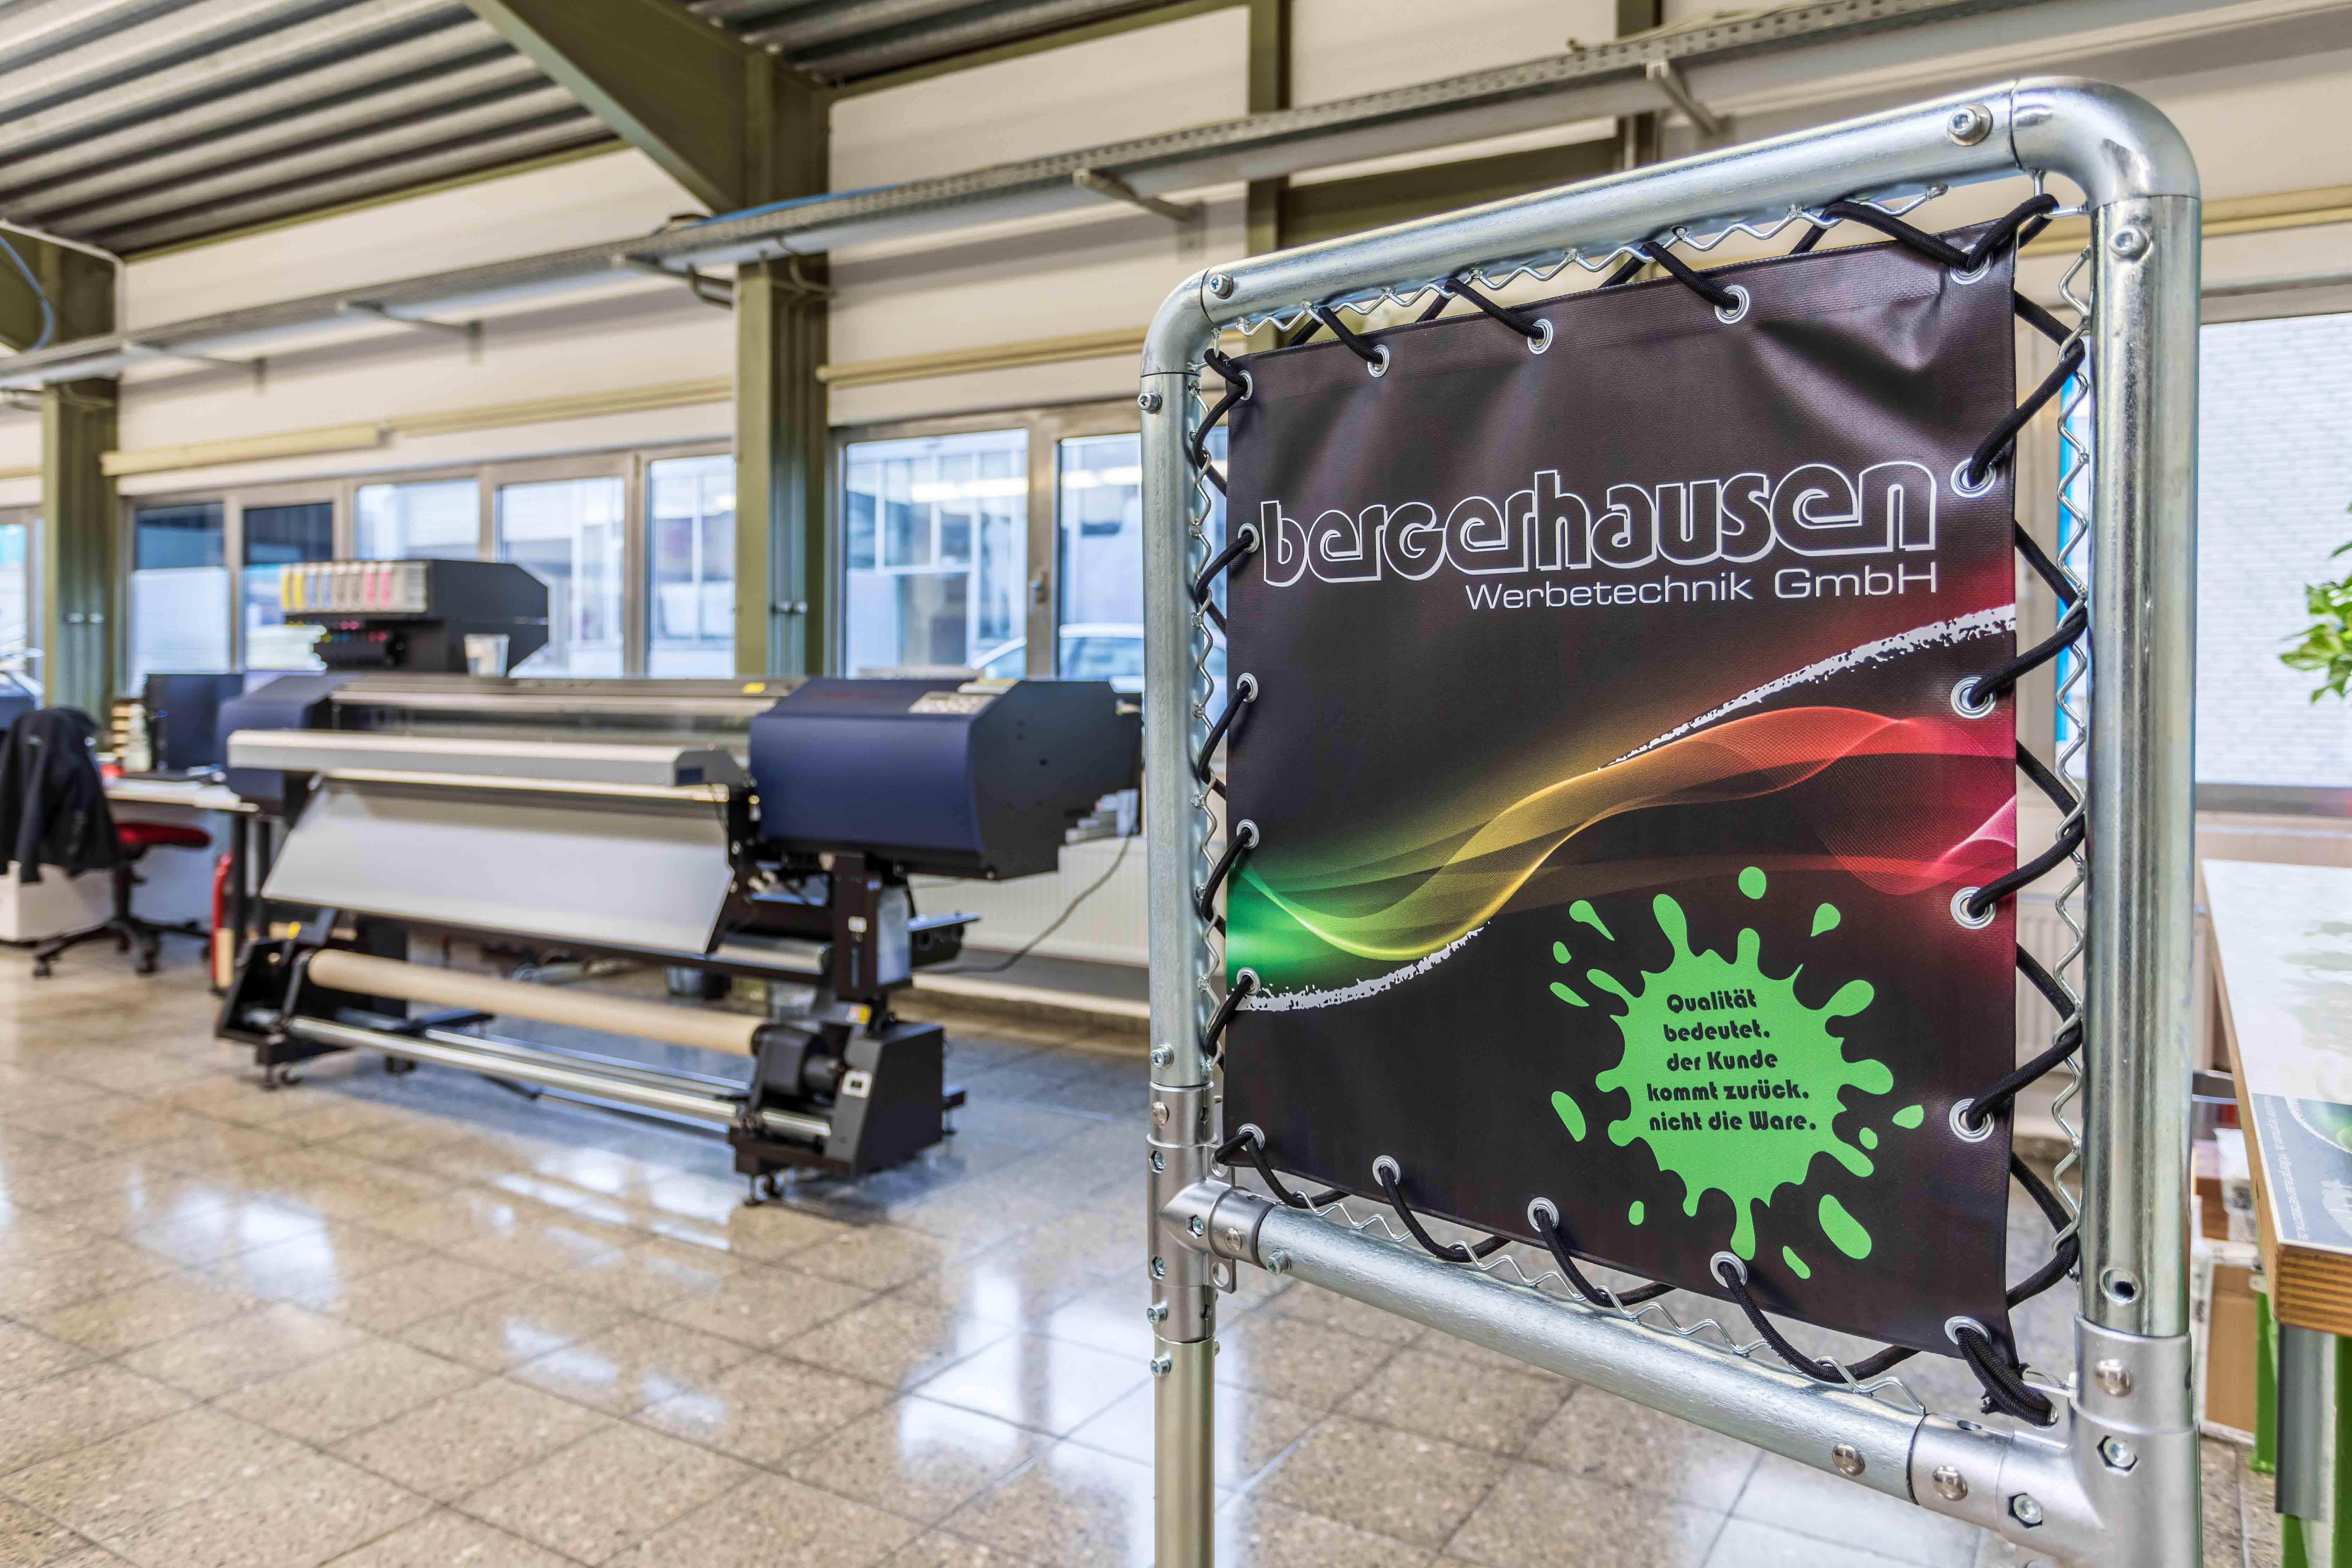 Bergerhausen Werbetechnik GmbH